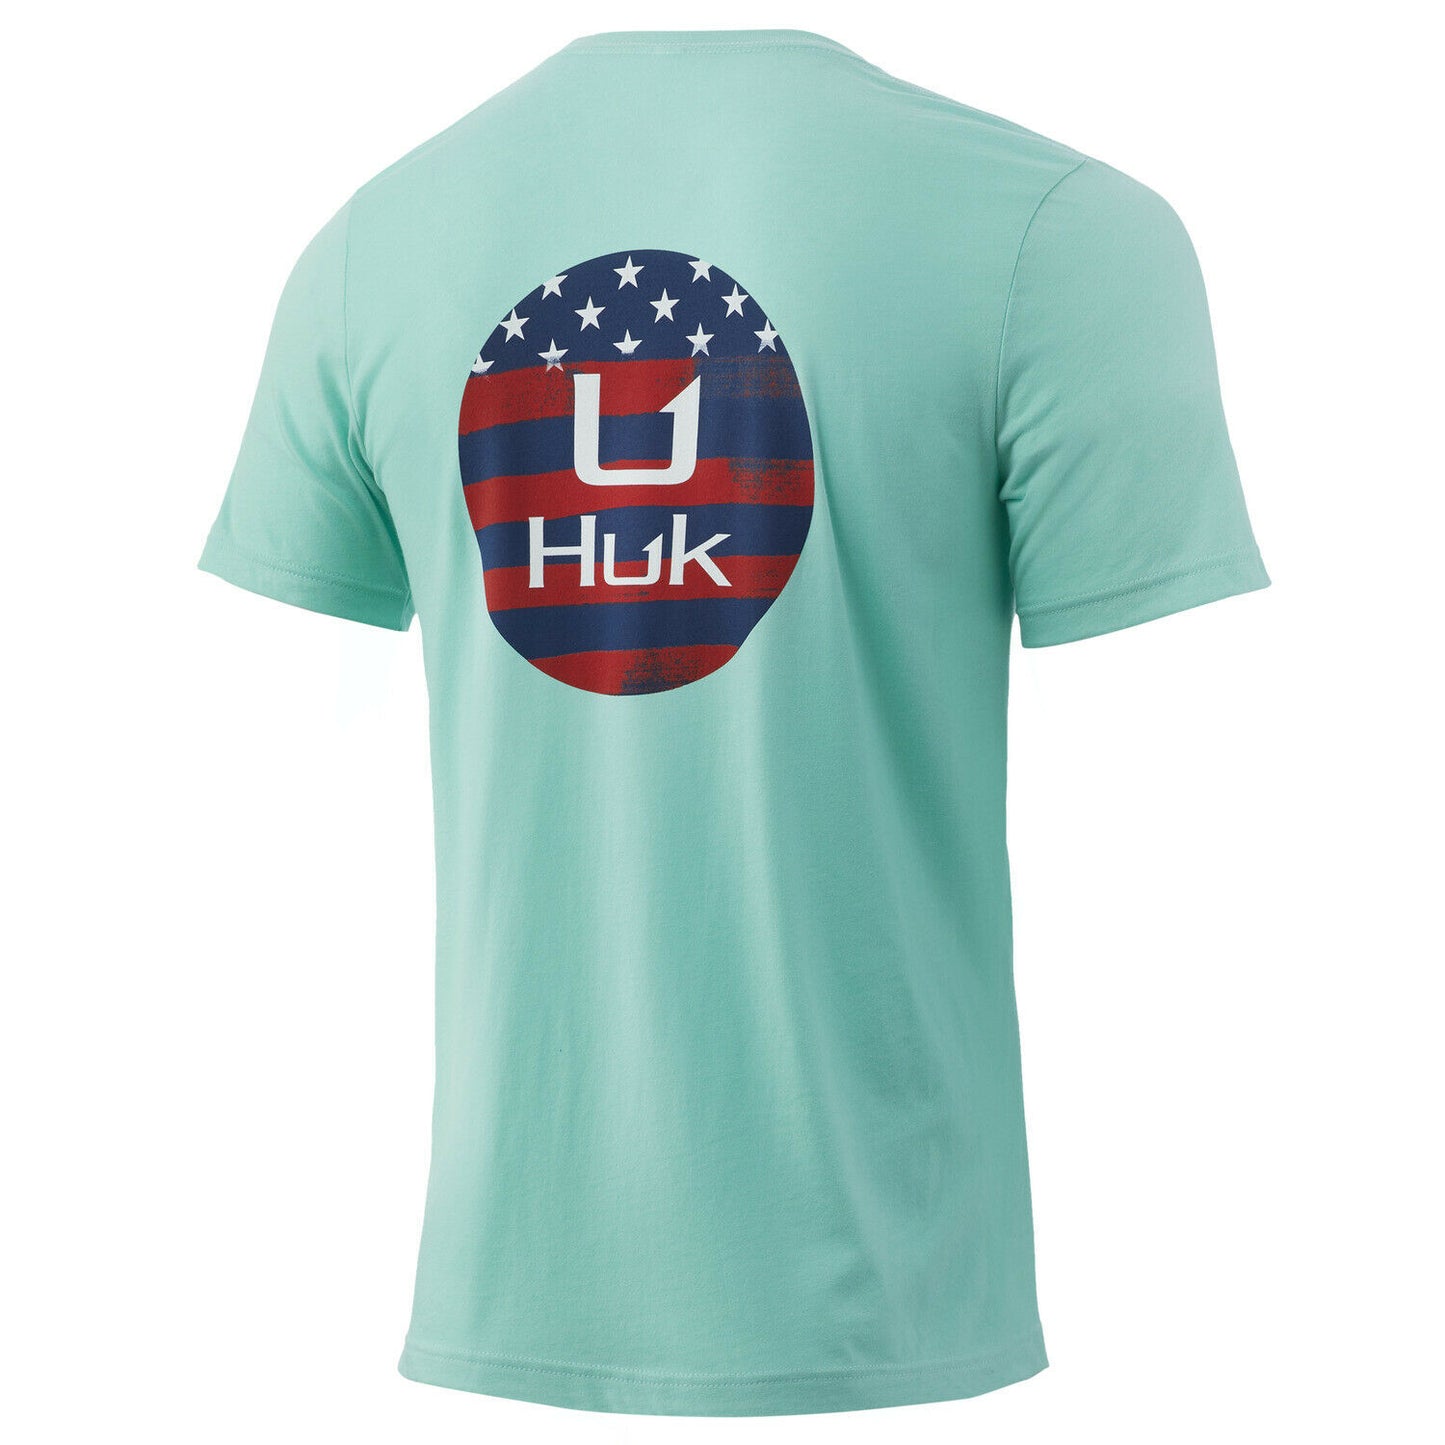 Huk KC American Pride Lightweight Tee H1000261 - Choose Size / Color